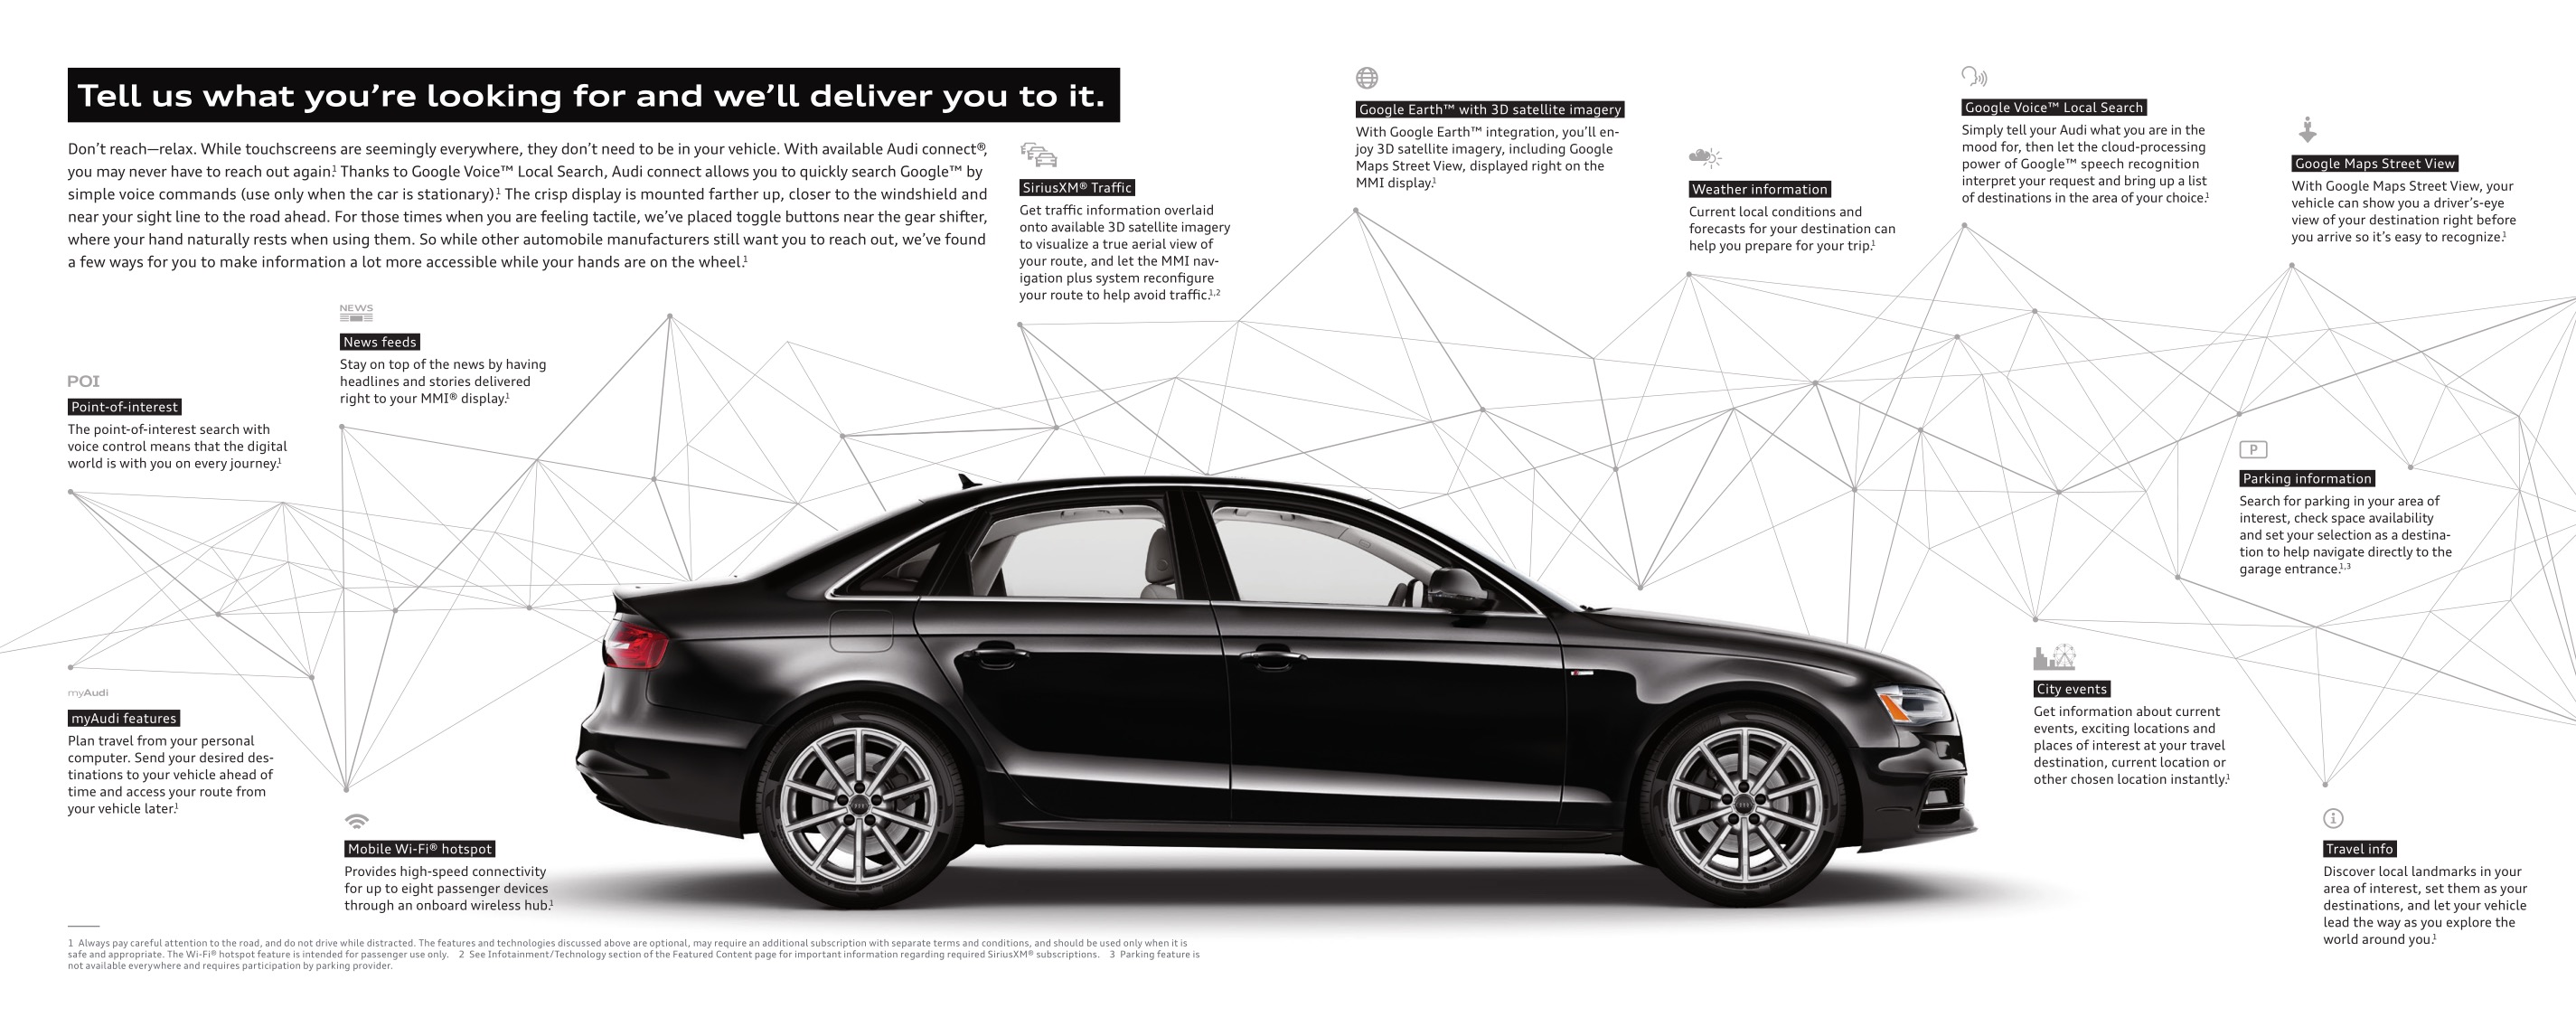 2015 Audi A4 Brochure Page 11